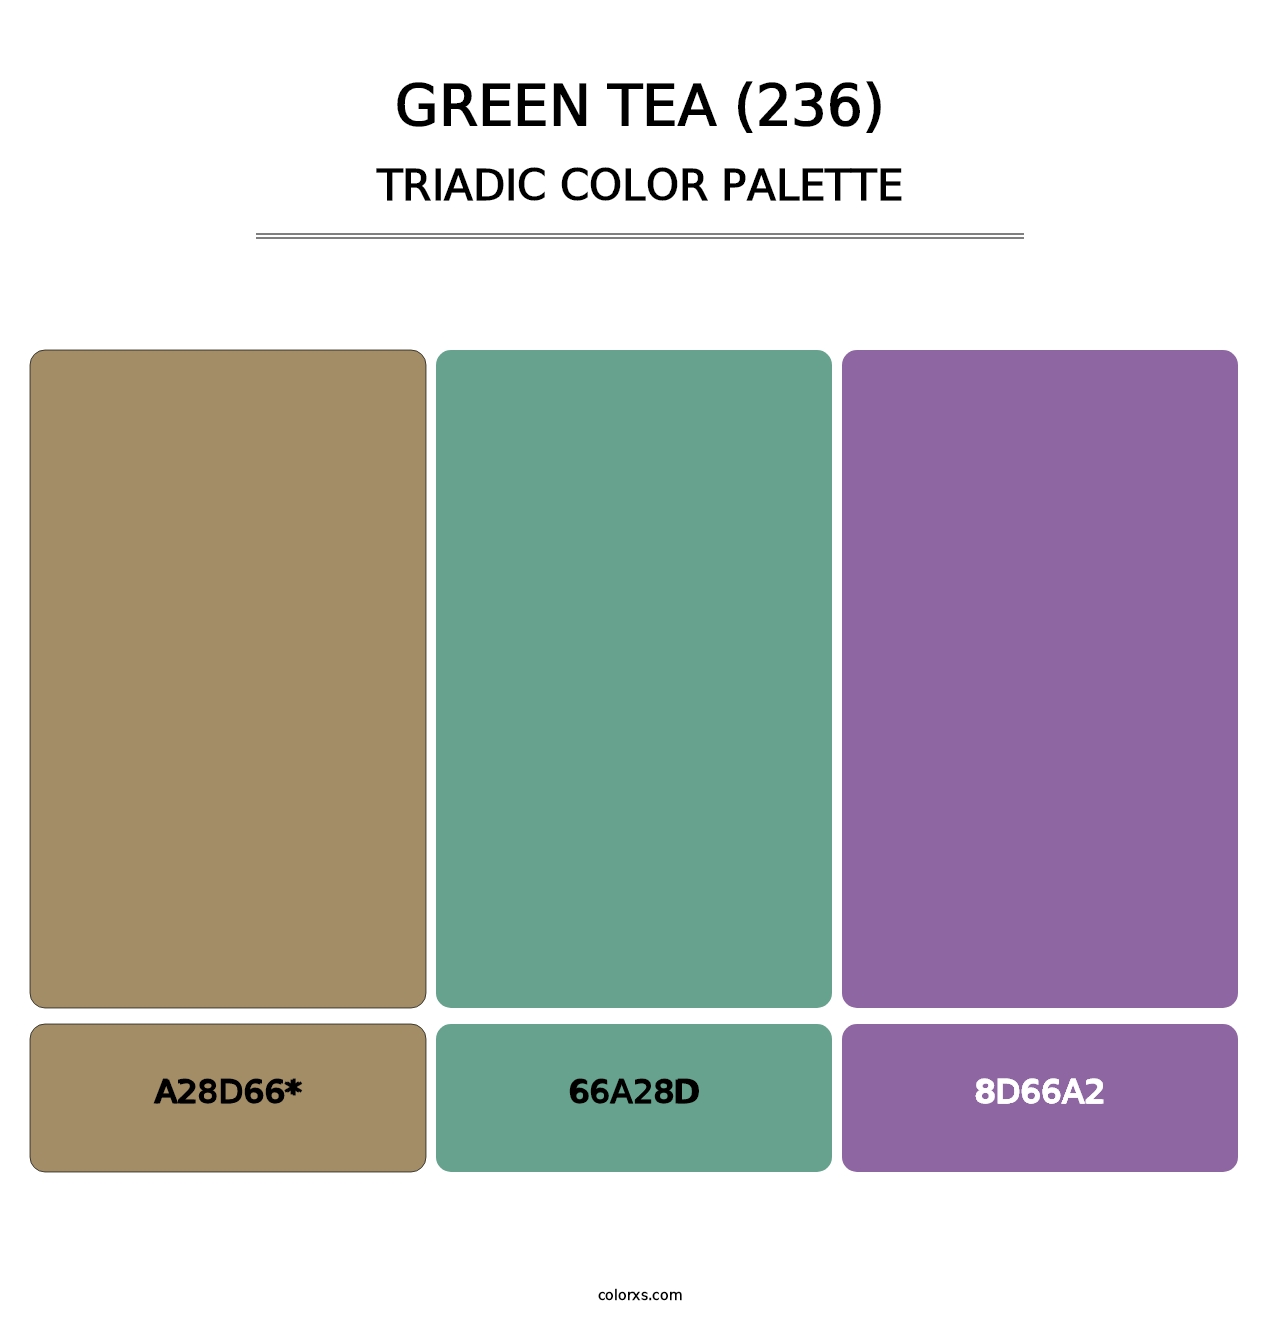 Green Tea (236) - Triadic Color Palette